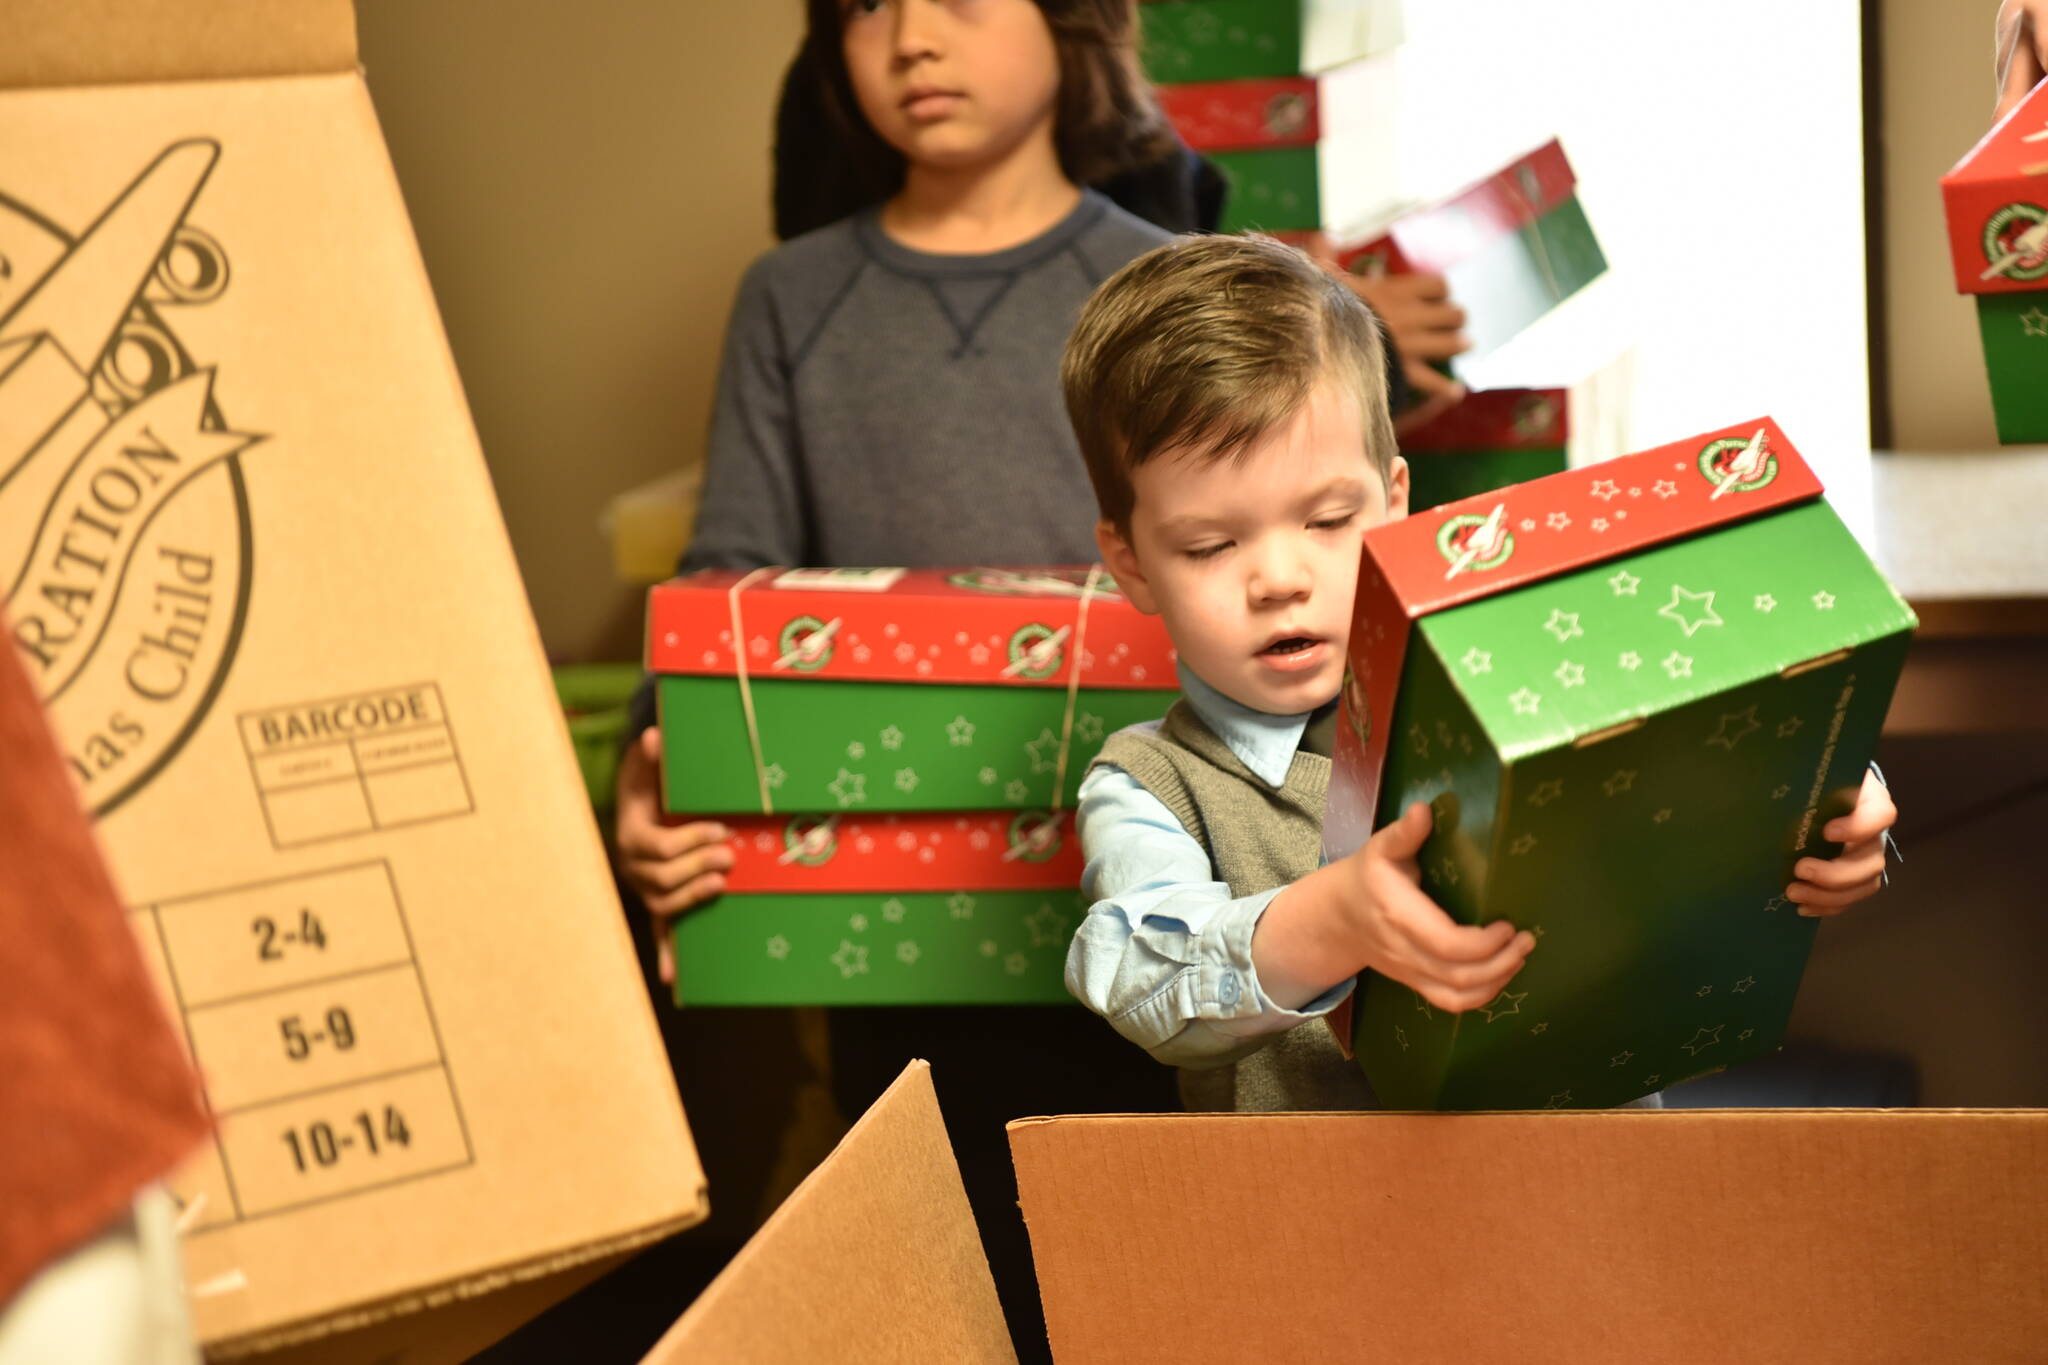 Luke Garaard, 3, puts a shoebox into the shipping box.